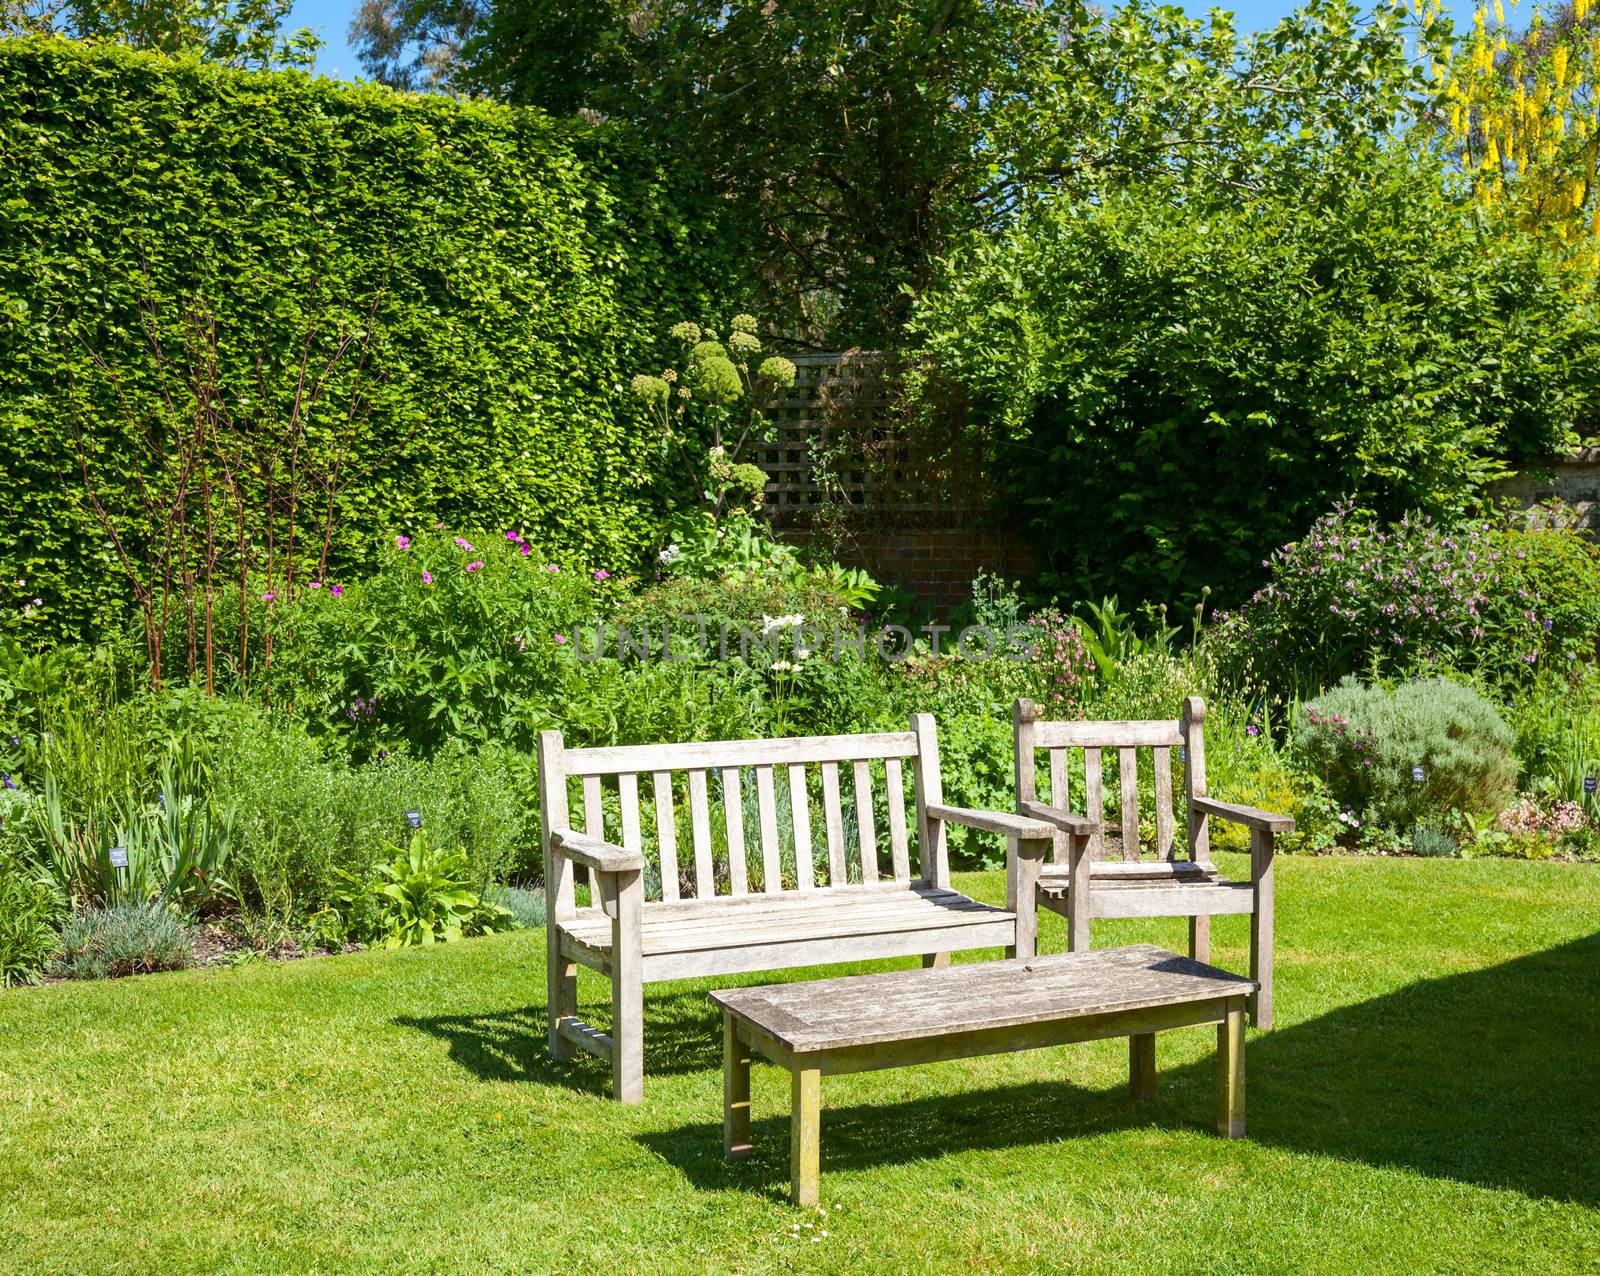 Wooden bench in a summer garden